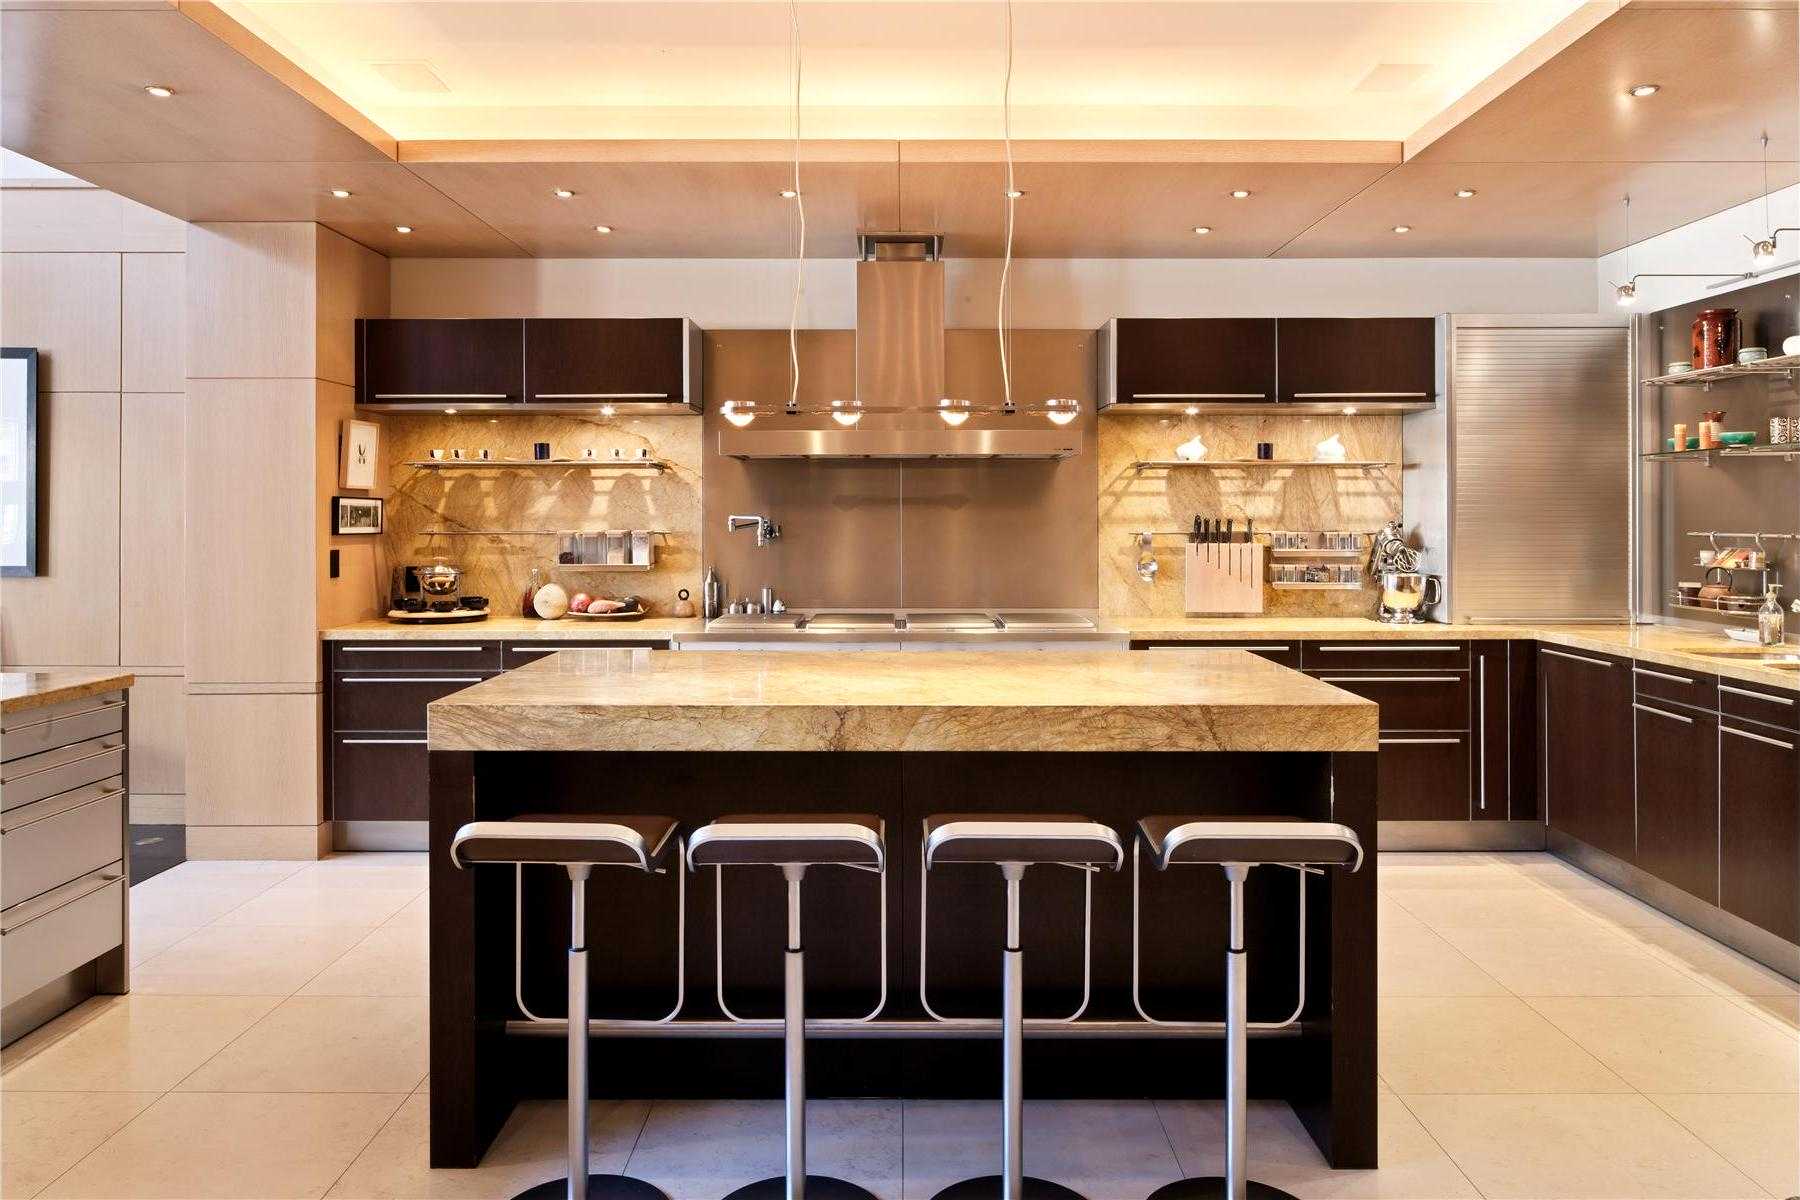 residential kitchen classroom design